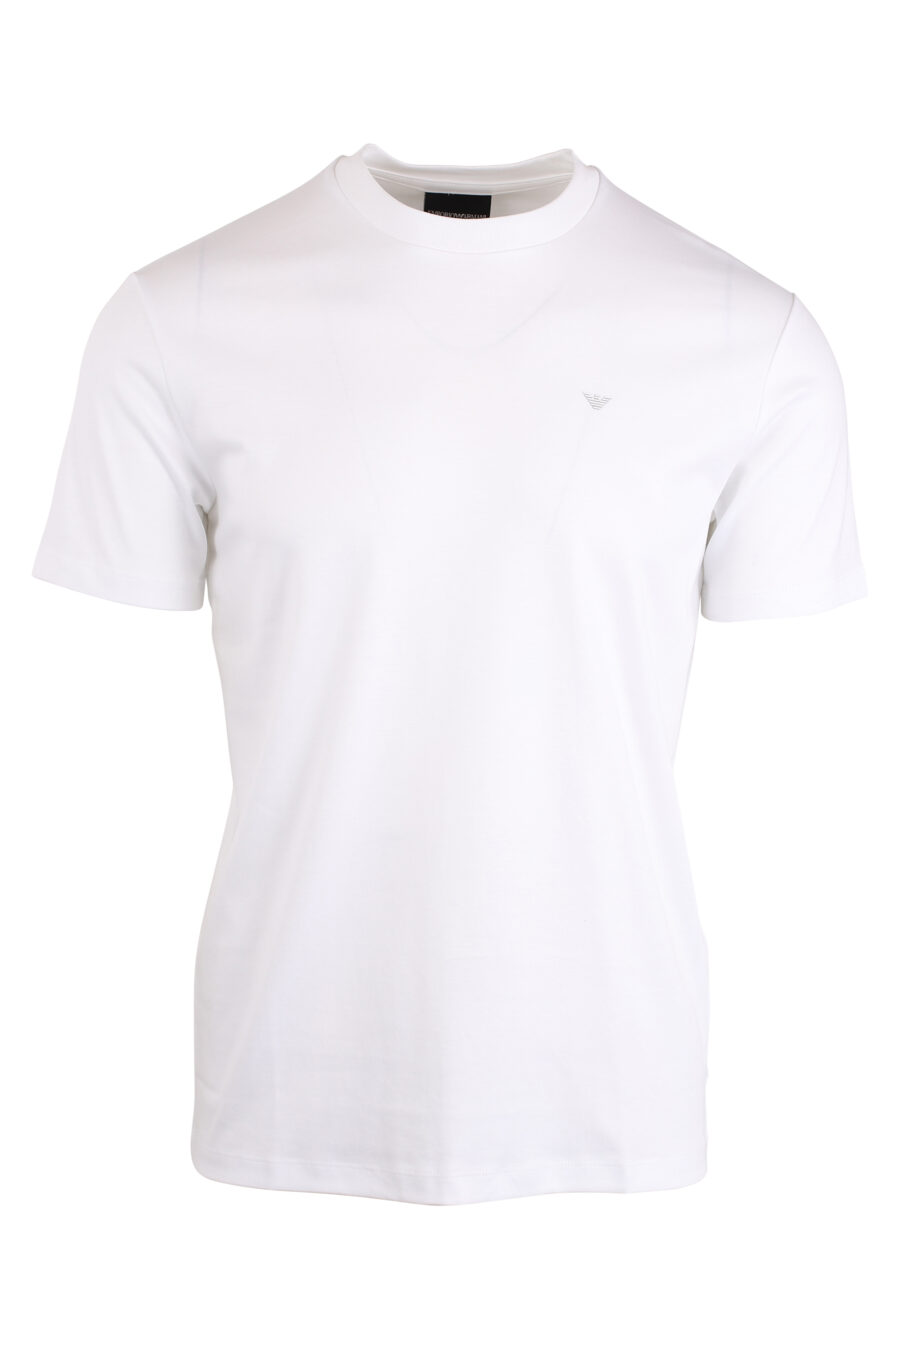 T-shirt blanc avec minilogue blanc - IMG 4267